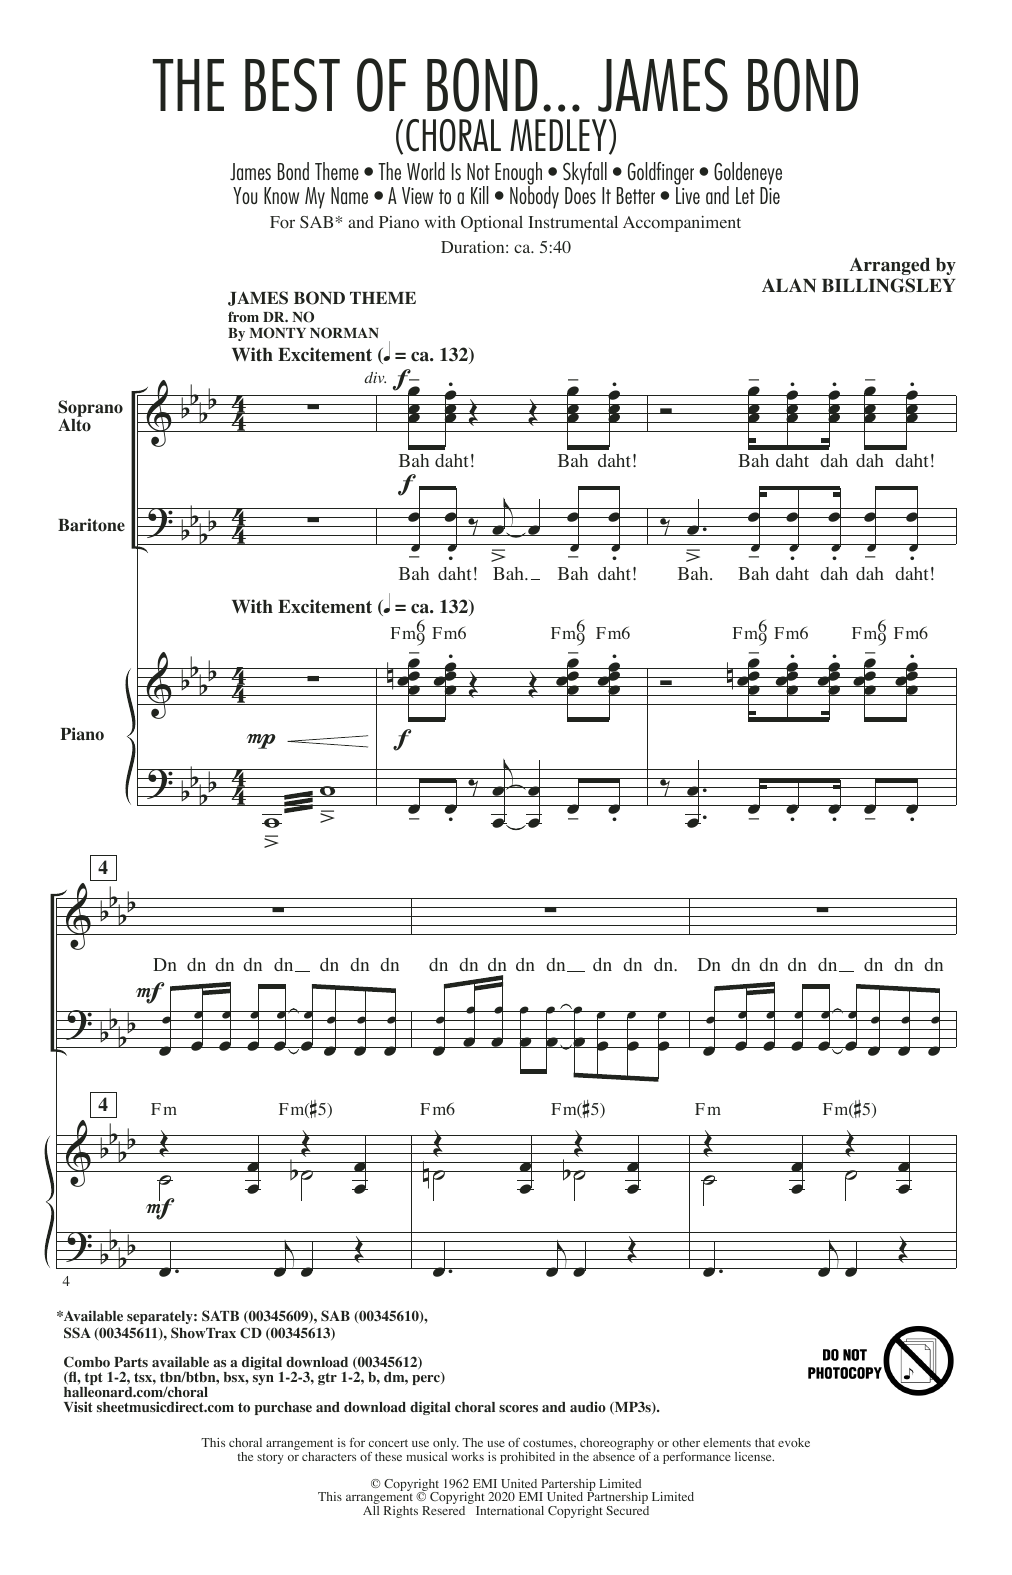 Alan Billingsley The Best of Bond... James Bond (Choral Medley) Sheet Music Notes & Chords for SAB Choir - Download or Print PDF